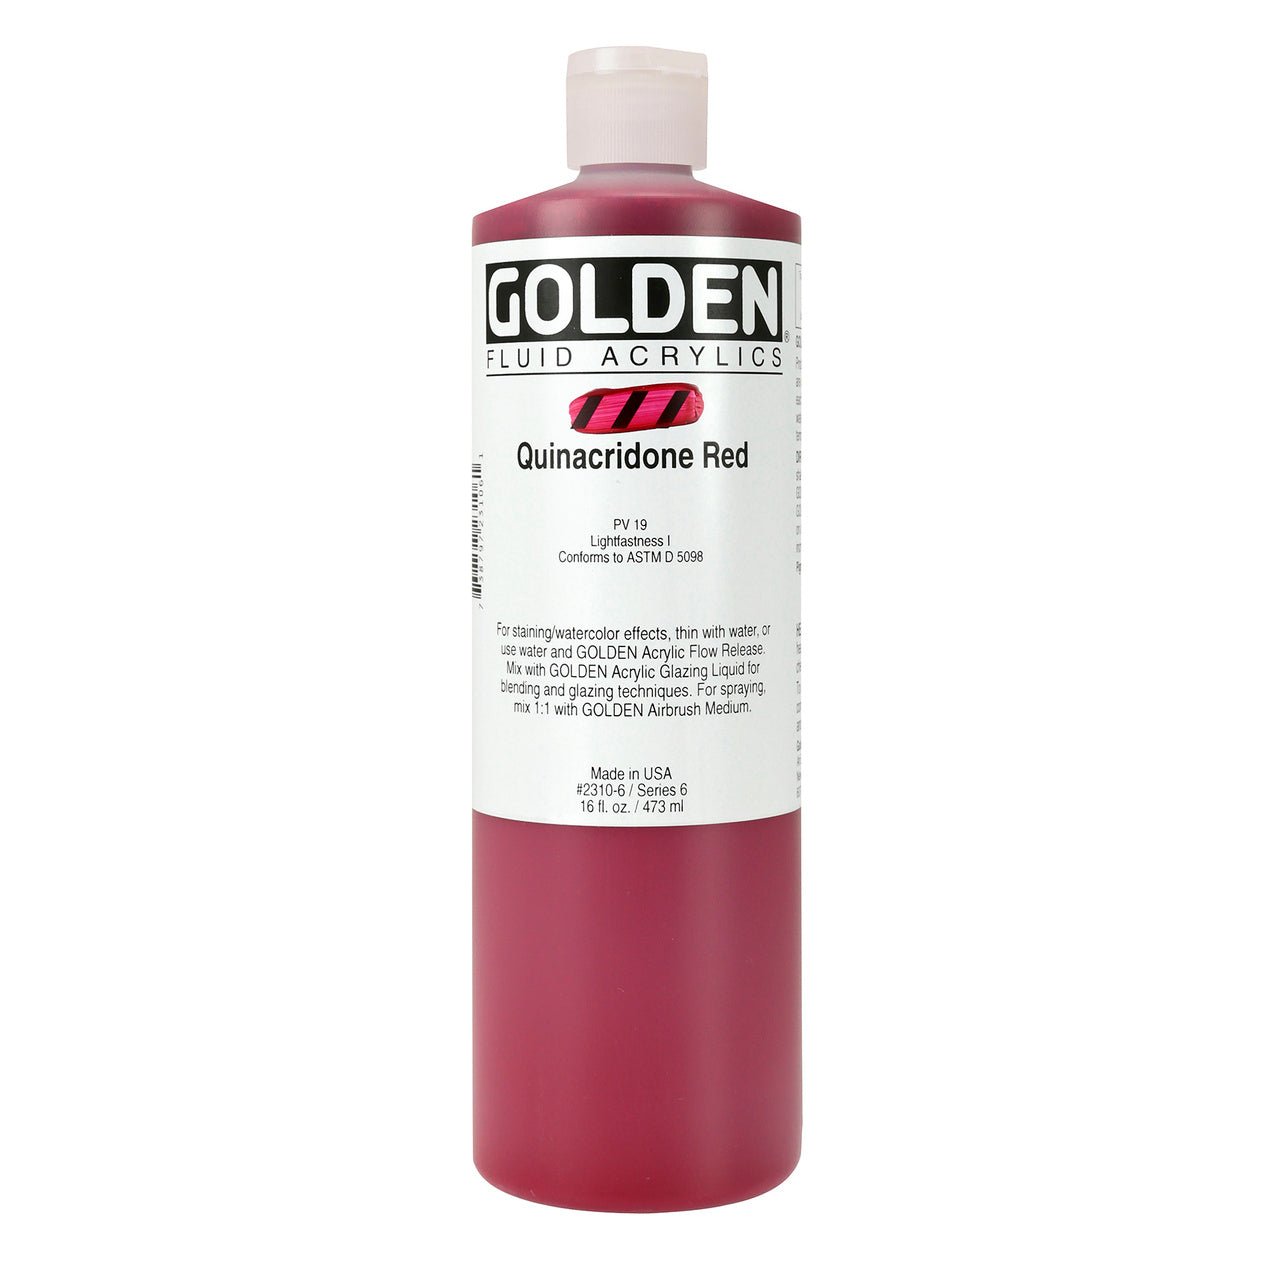 Golden Fluid Acrylic Quinacridone Red 16 oz - merriartist.com